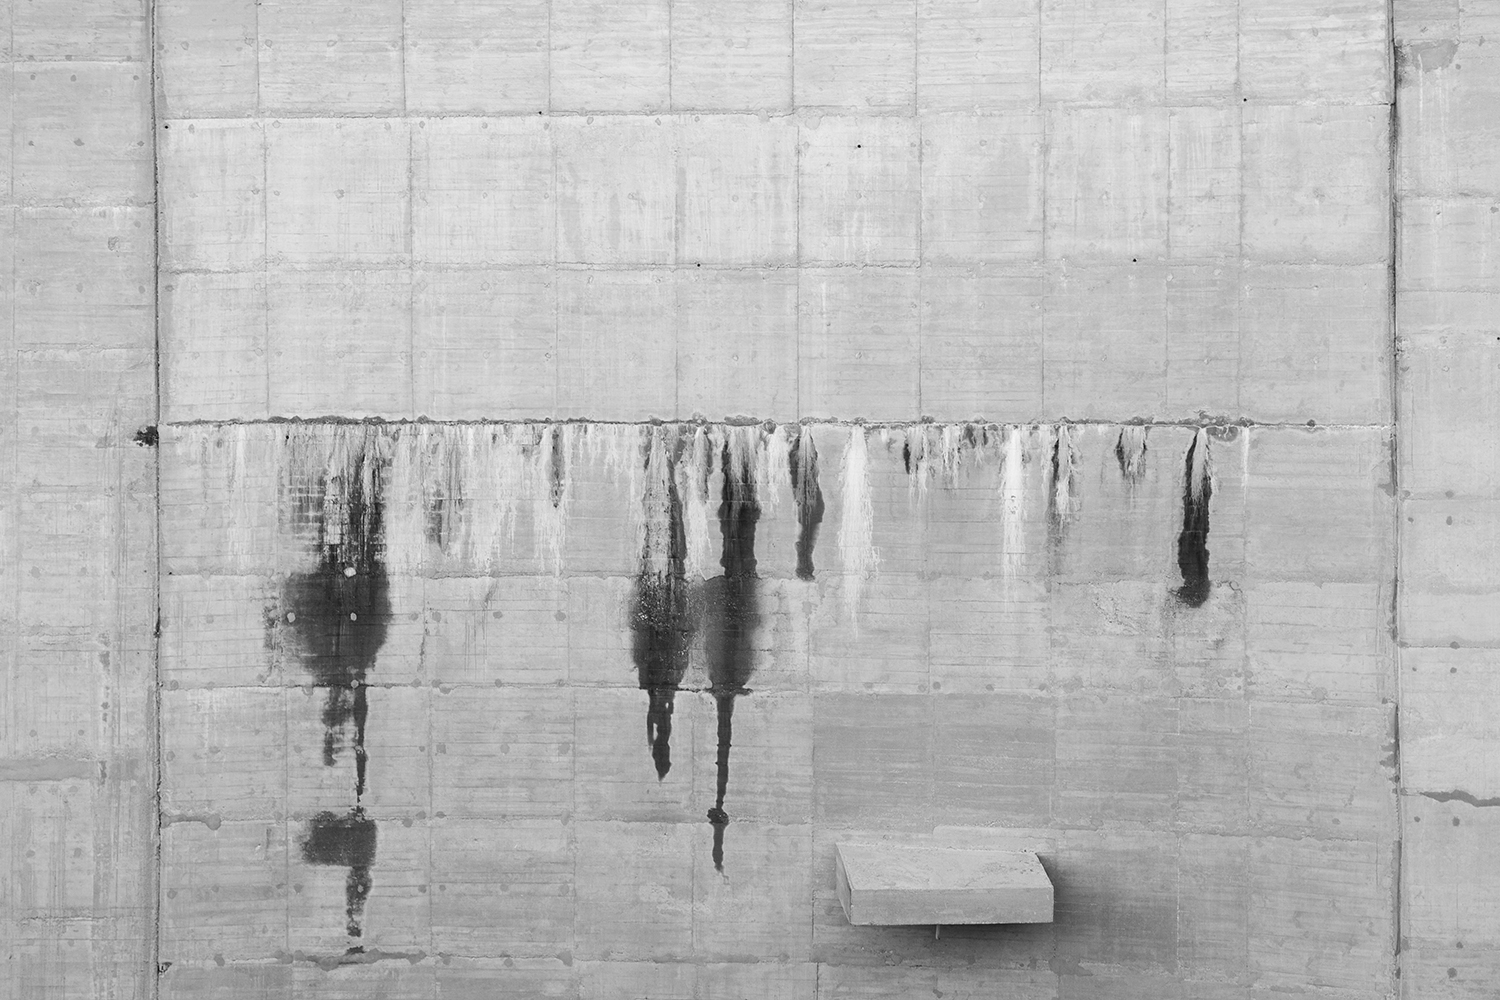 carina martins, hub-structures - fotografia a preto e branco de infiltracoes de agua na parede de uma barragem